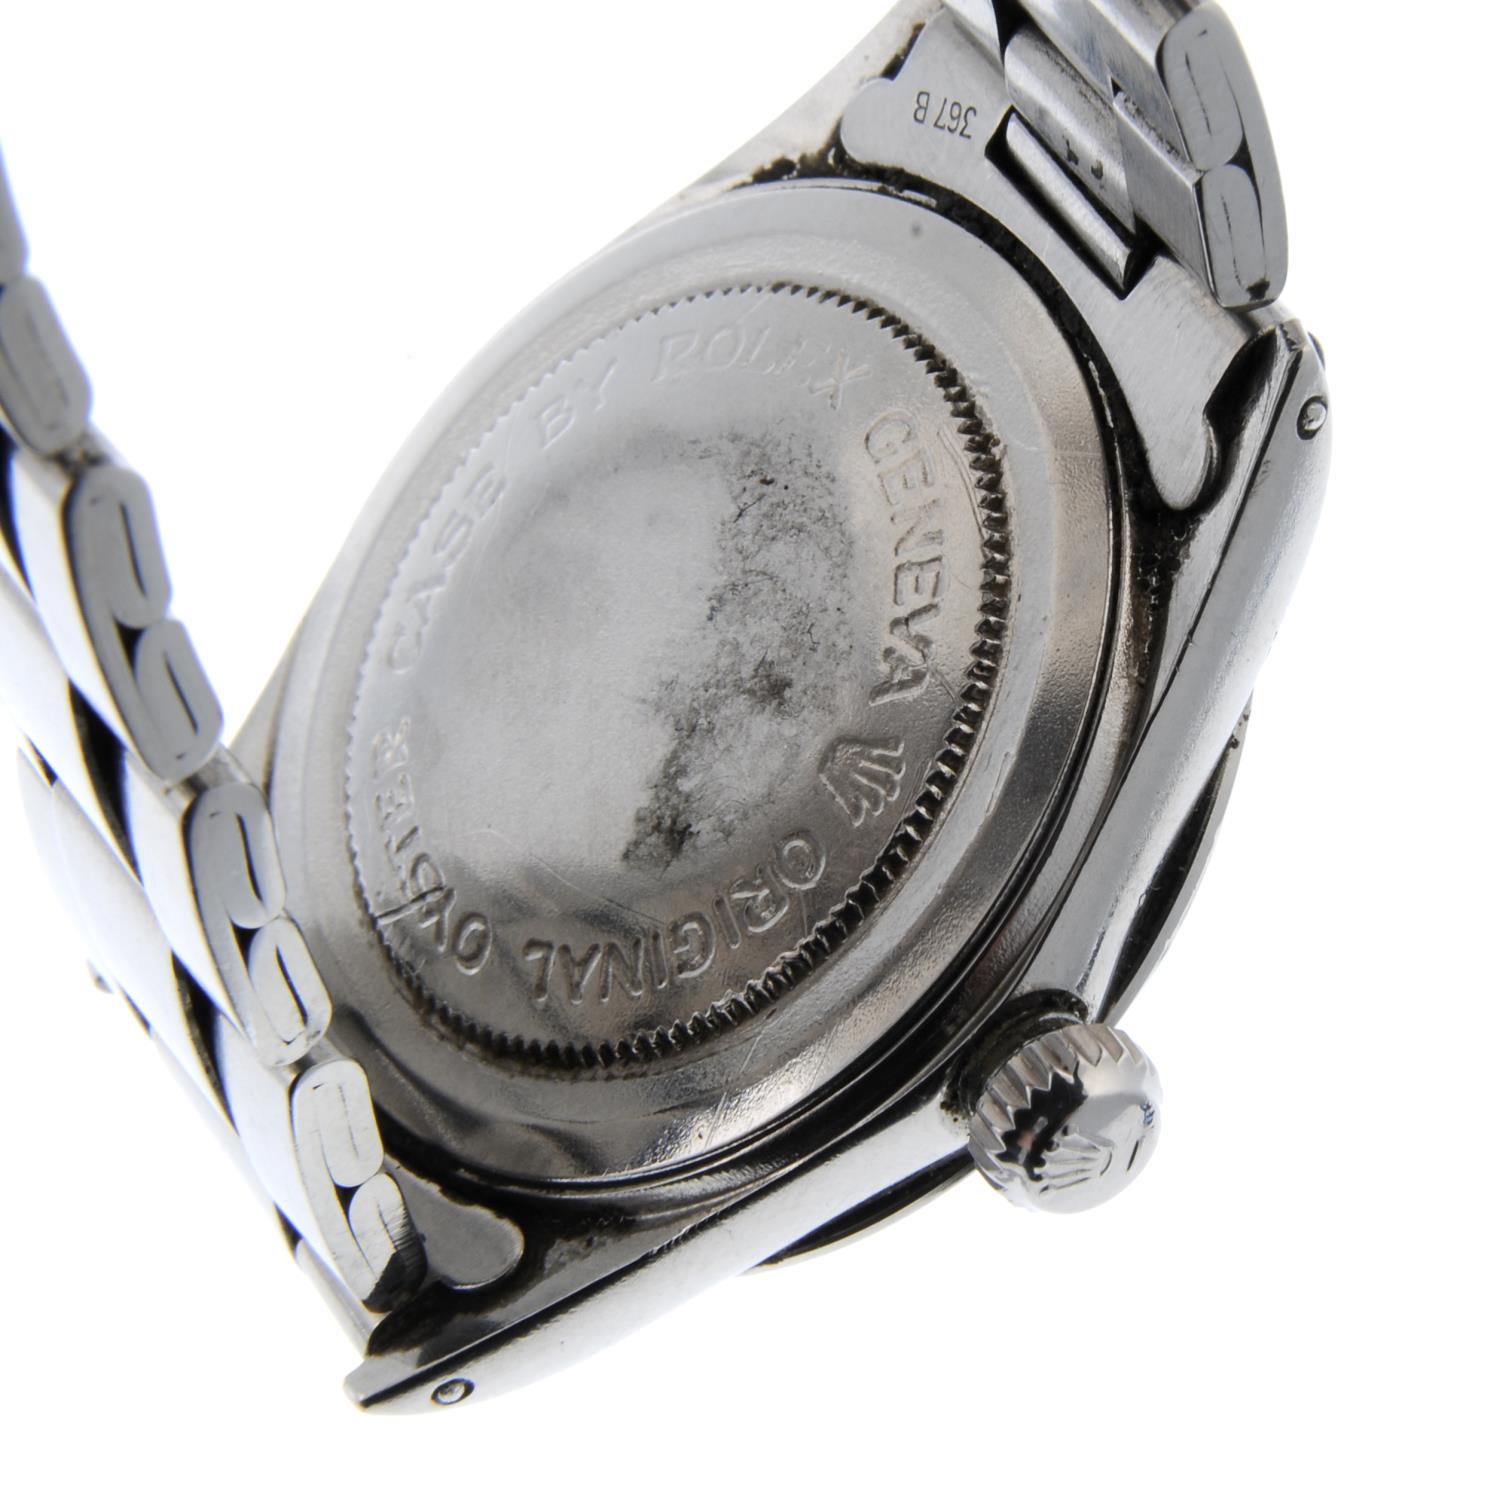 TUDOR - a mid-size Prince Oysterdate bracelet watch. - Image 2 of 4